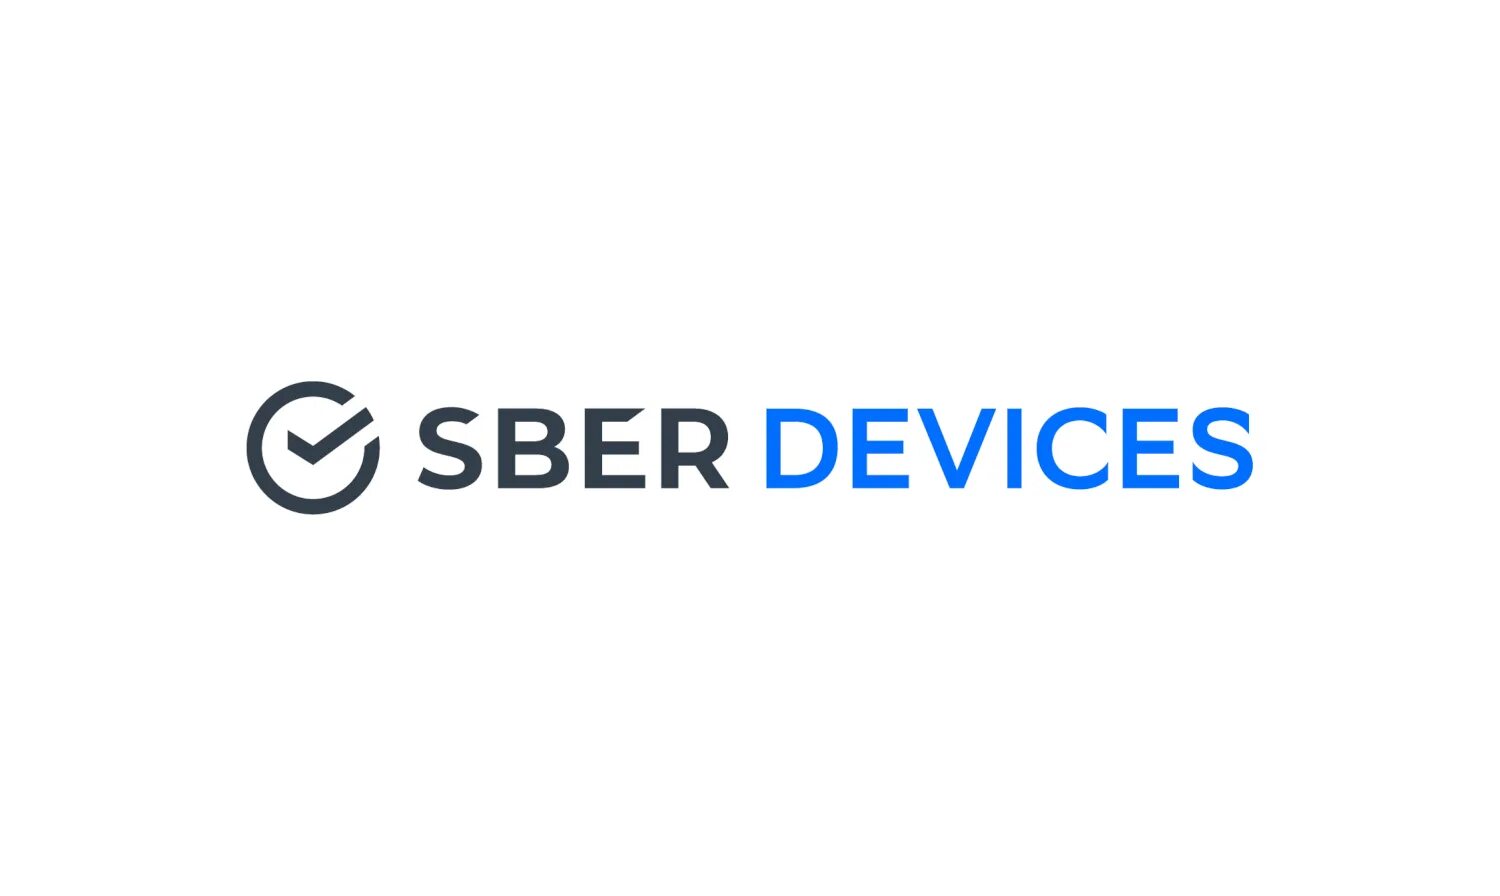 Https sberdevices ru r. Сбердевайсы логотип. Sber devices логотип. Сбер devices. Девайсы Сбера.